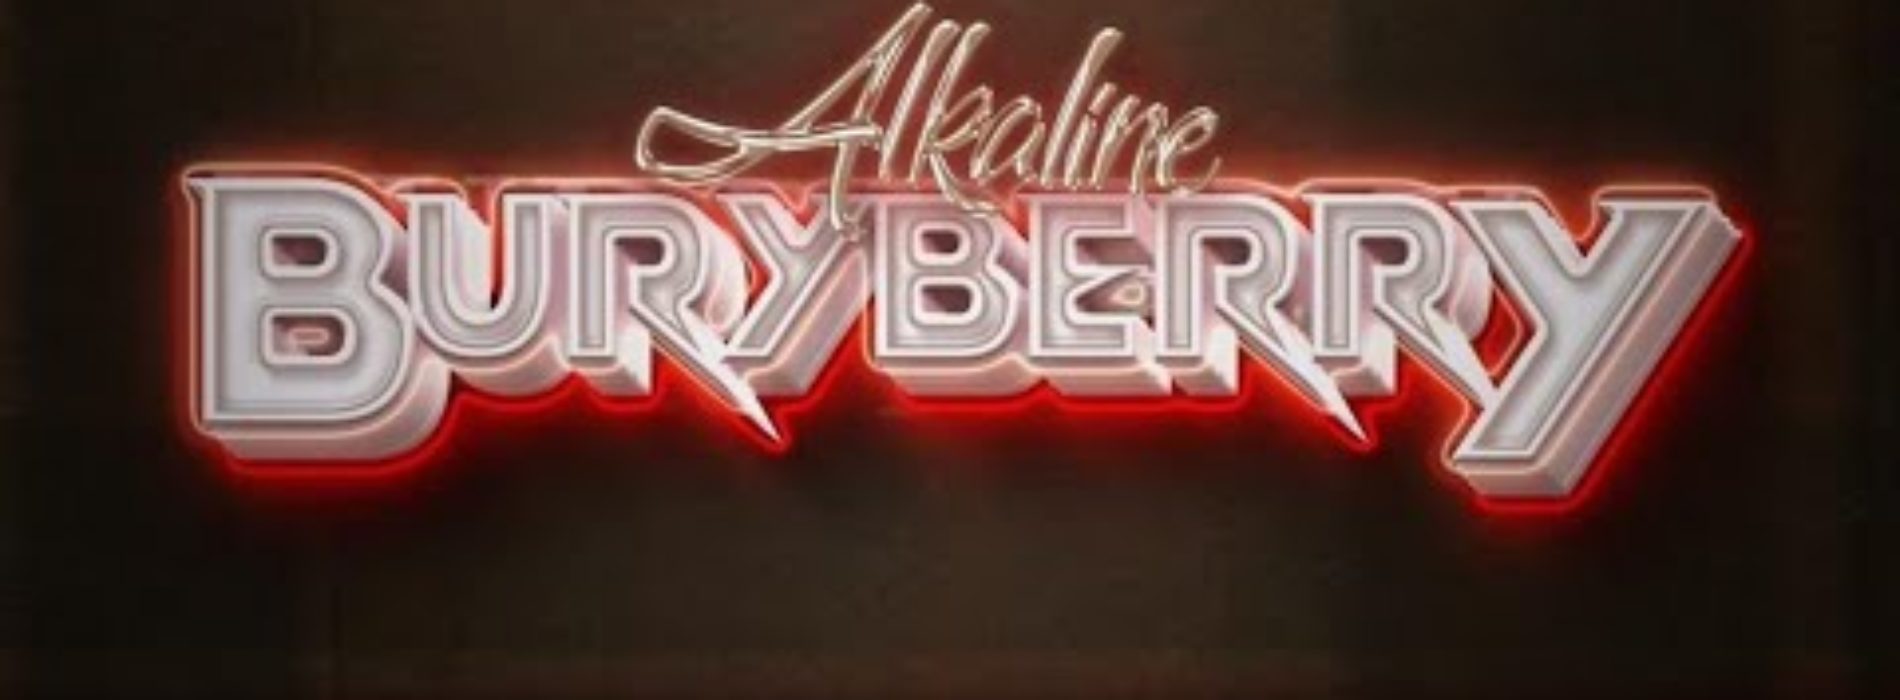 Alkaline – Buryberry (Official Audio) – Août 2020